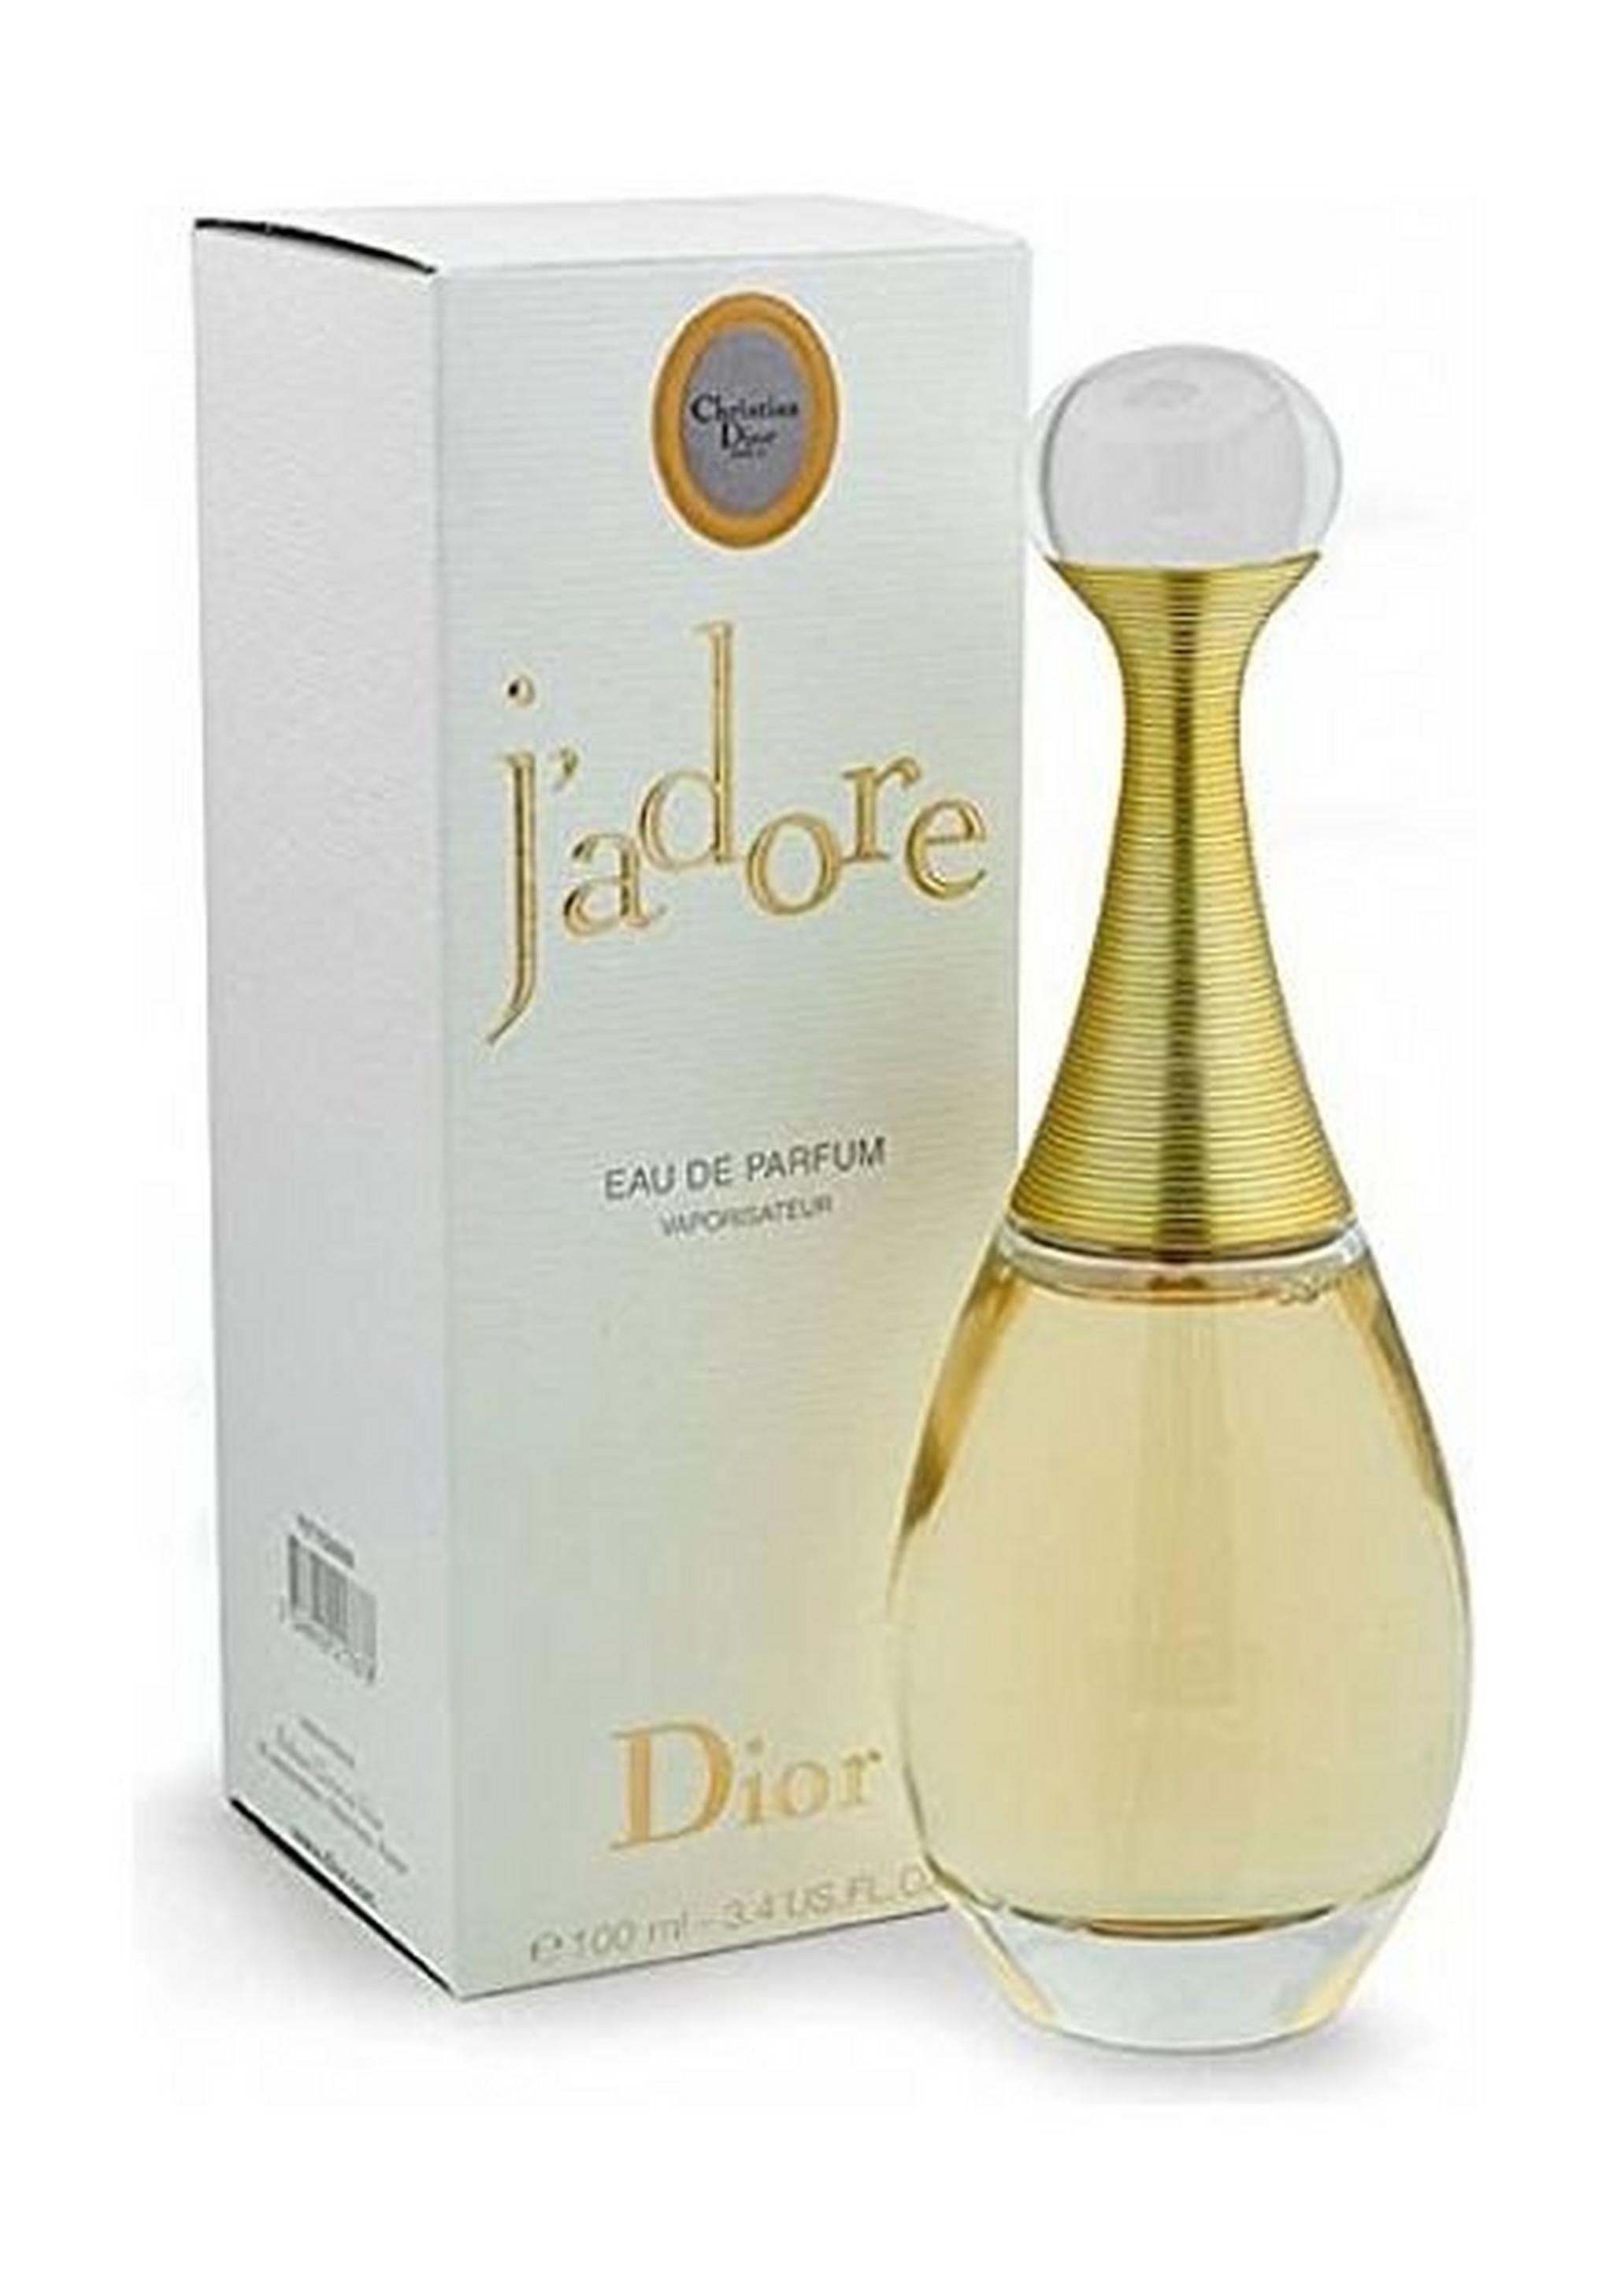 J'adore by Christian Dior for Women 100 mL Eau de Parfum